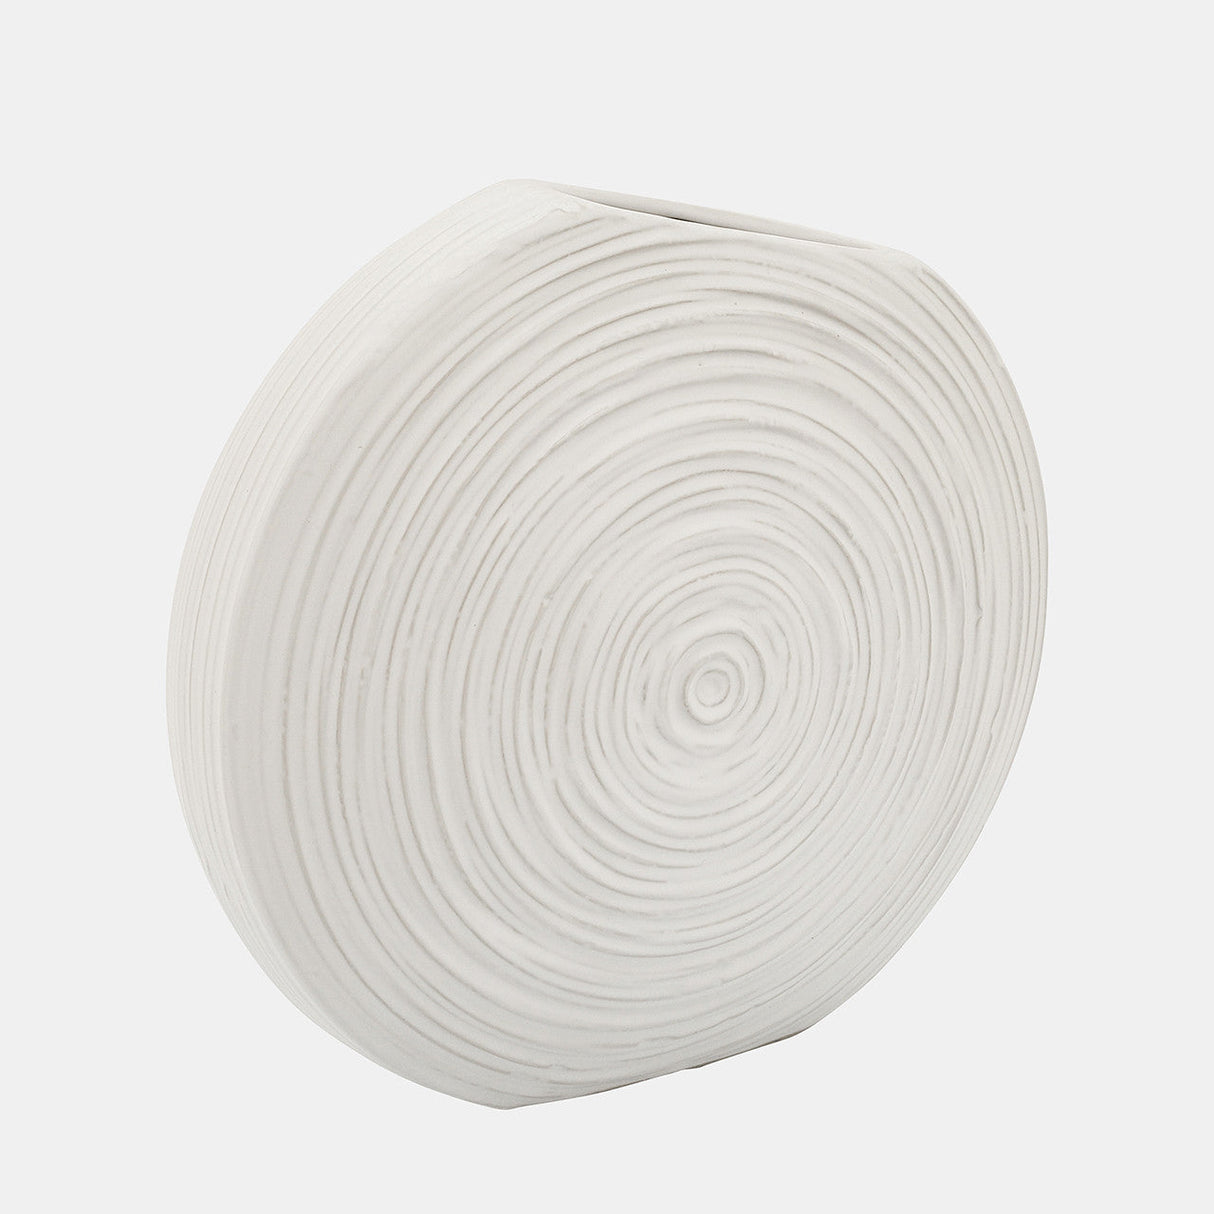 11"h Oval Swirled Vase, White